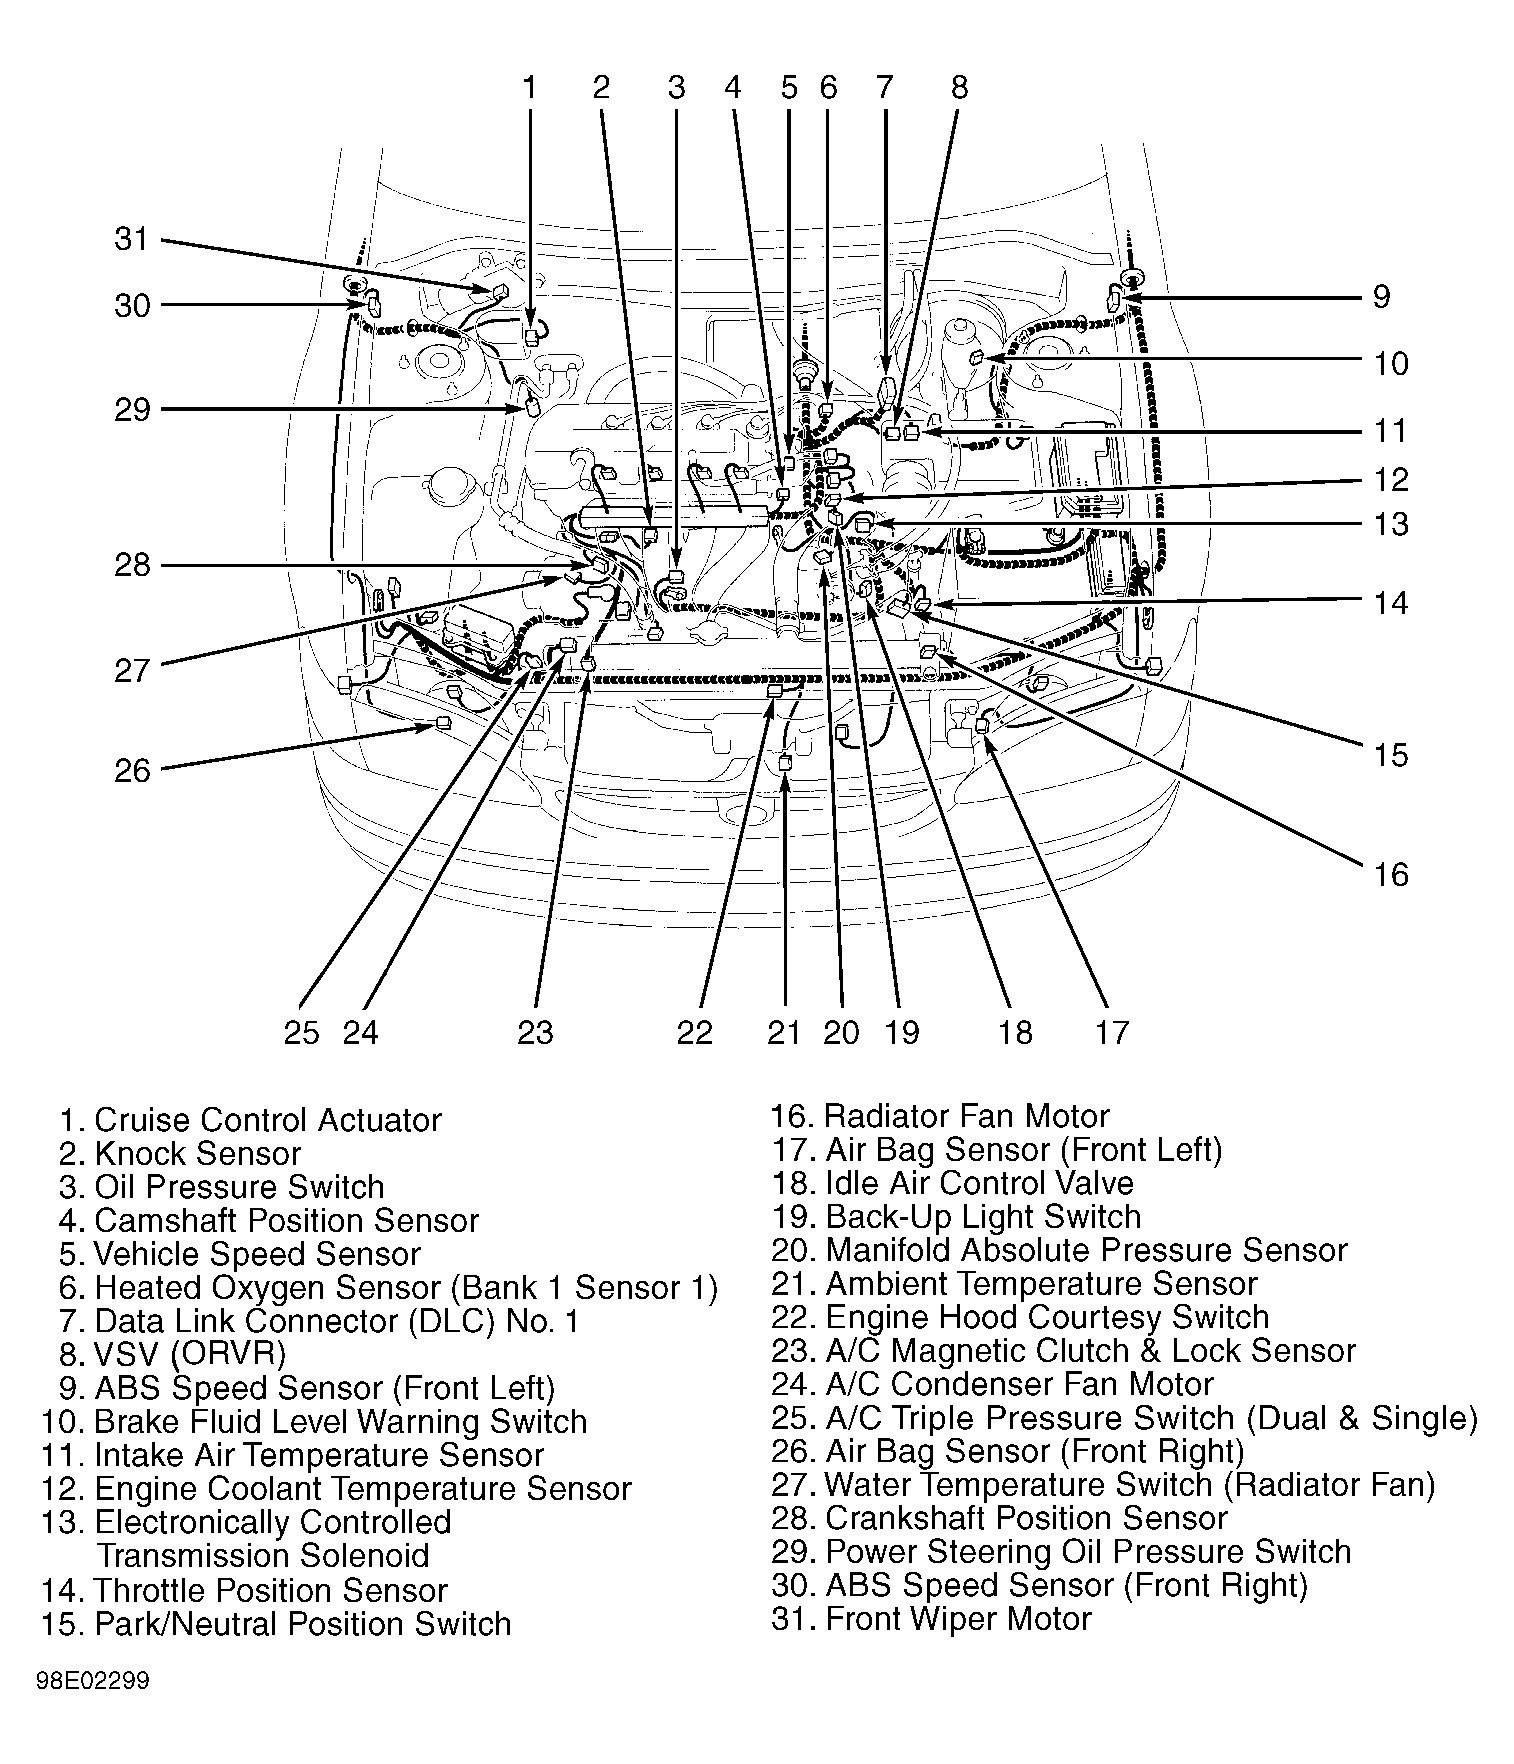 Diagram Of Car Transmission â Awesome toyota Parts Barn Of Diagram Of Car Transmission